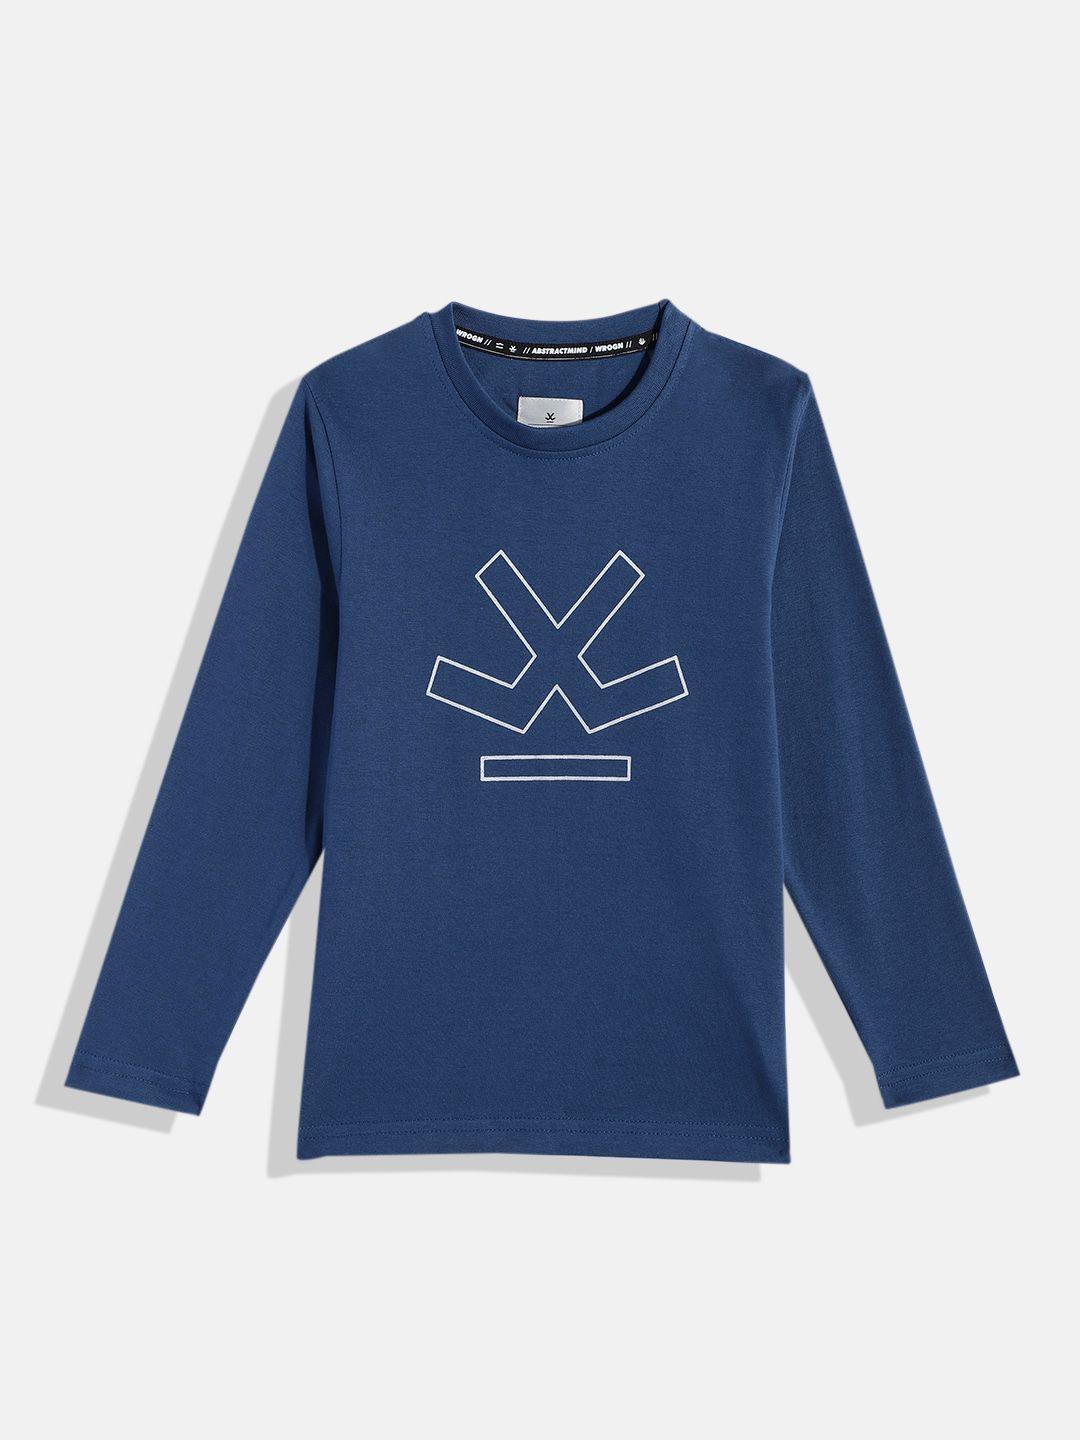 wrogn youth boys brand logo print indigo knitted slim fit t-shirt